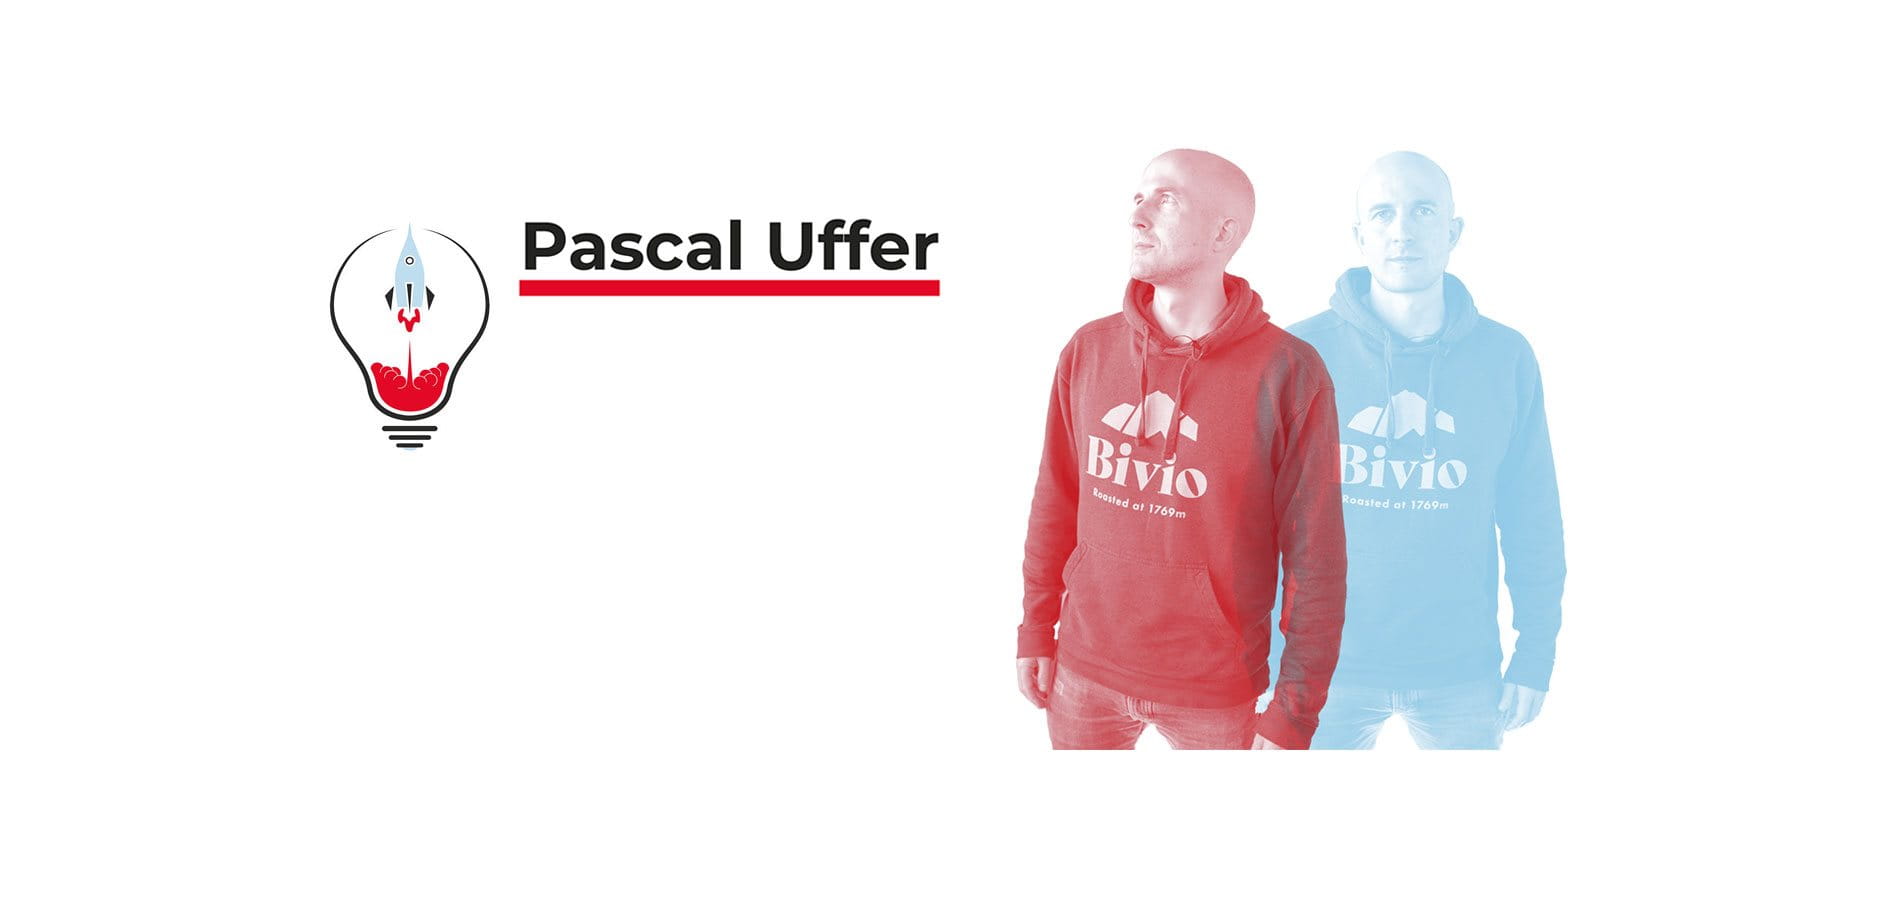 Porträtbild von Pascal Uffer vom Start-up Boostbar